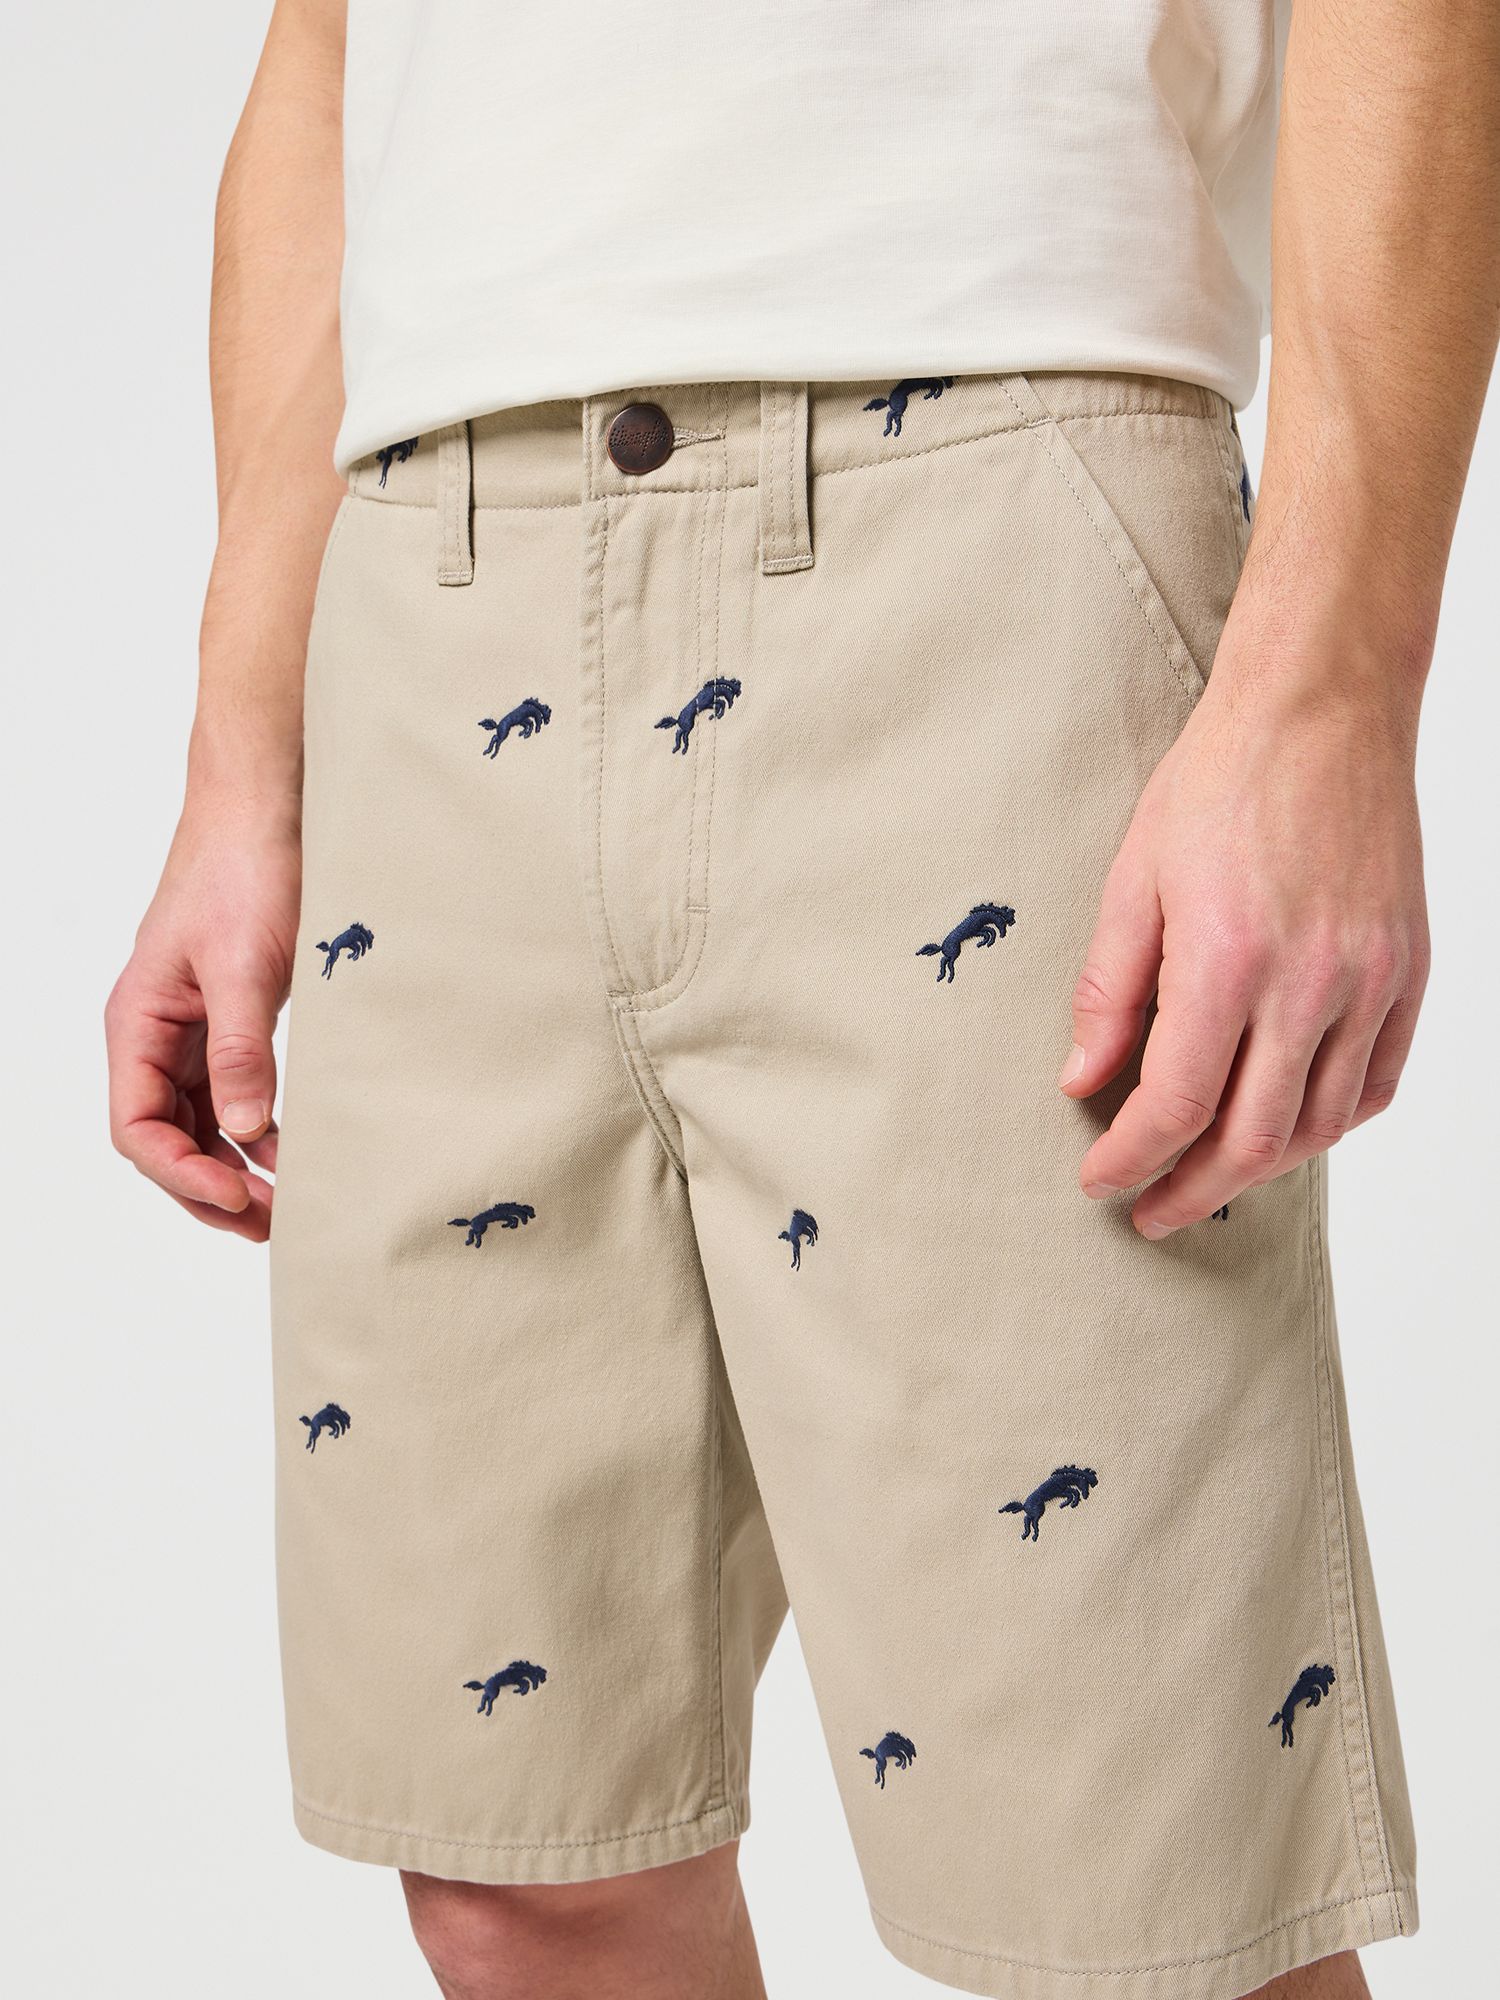 Wrangler Critter Chino Shorts, Plaza Taupe, 34R